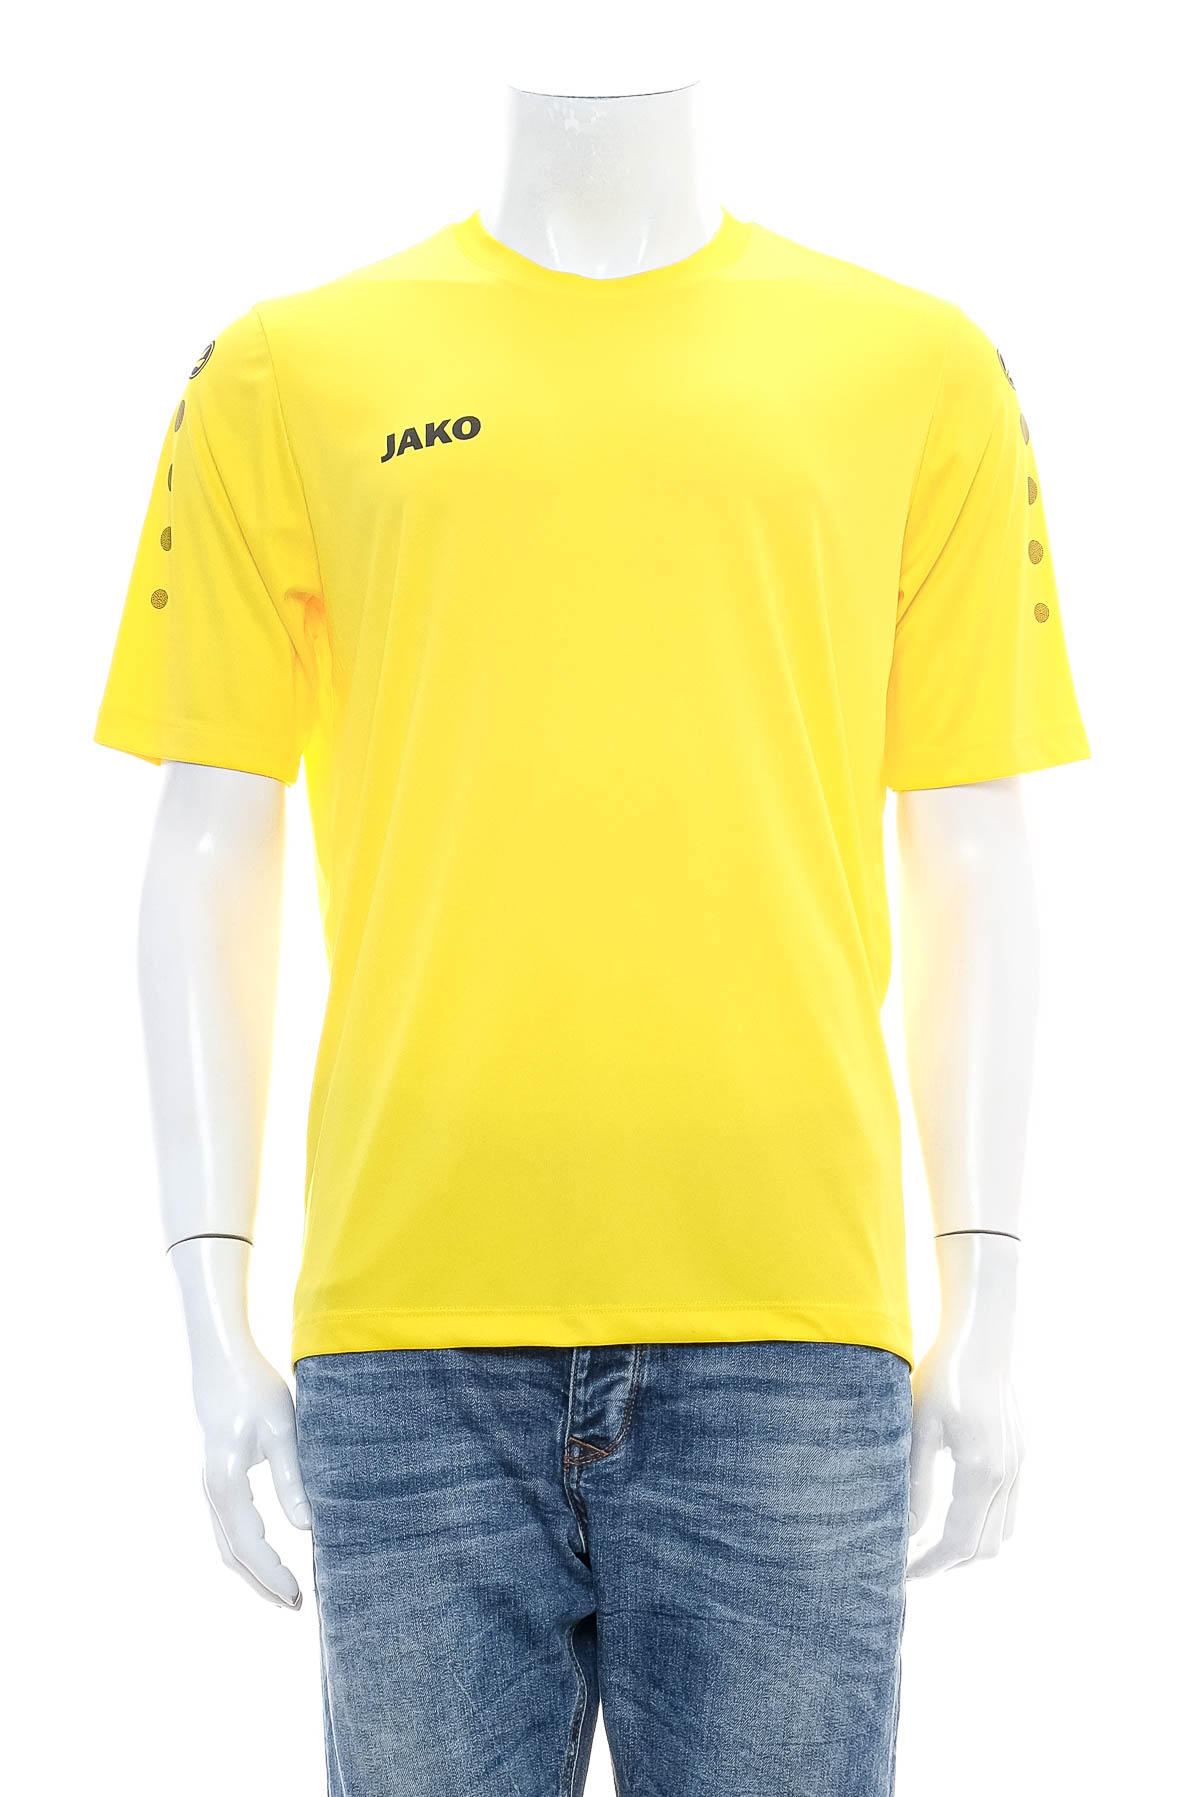 Men's T-shirt - Jako - 0